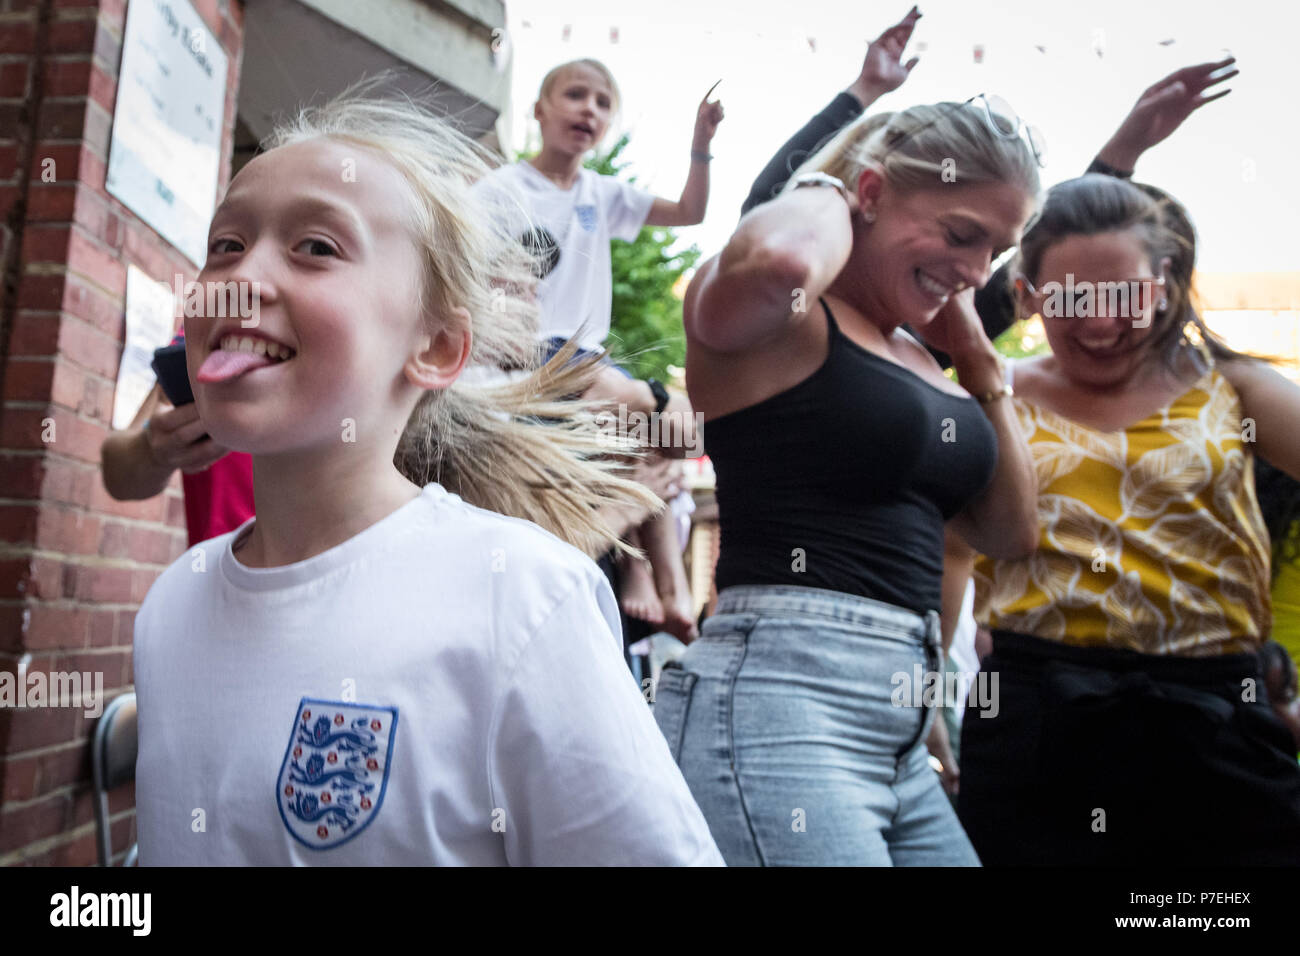 England Fans aus den Kirby Immobilien in Bermondsey feiern England der Mannschaft, während die FIFA 2018 WM-Spiel England gegen Kolumbien. Stockfoto